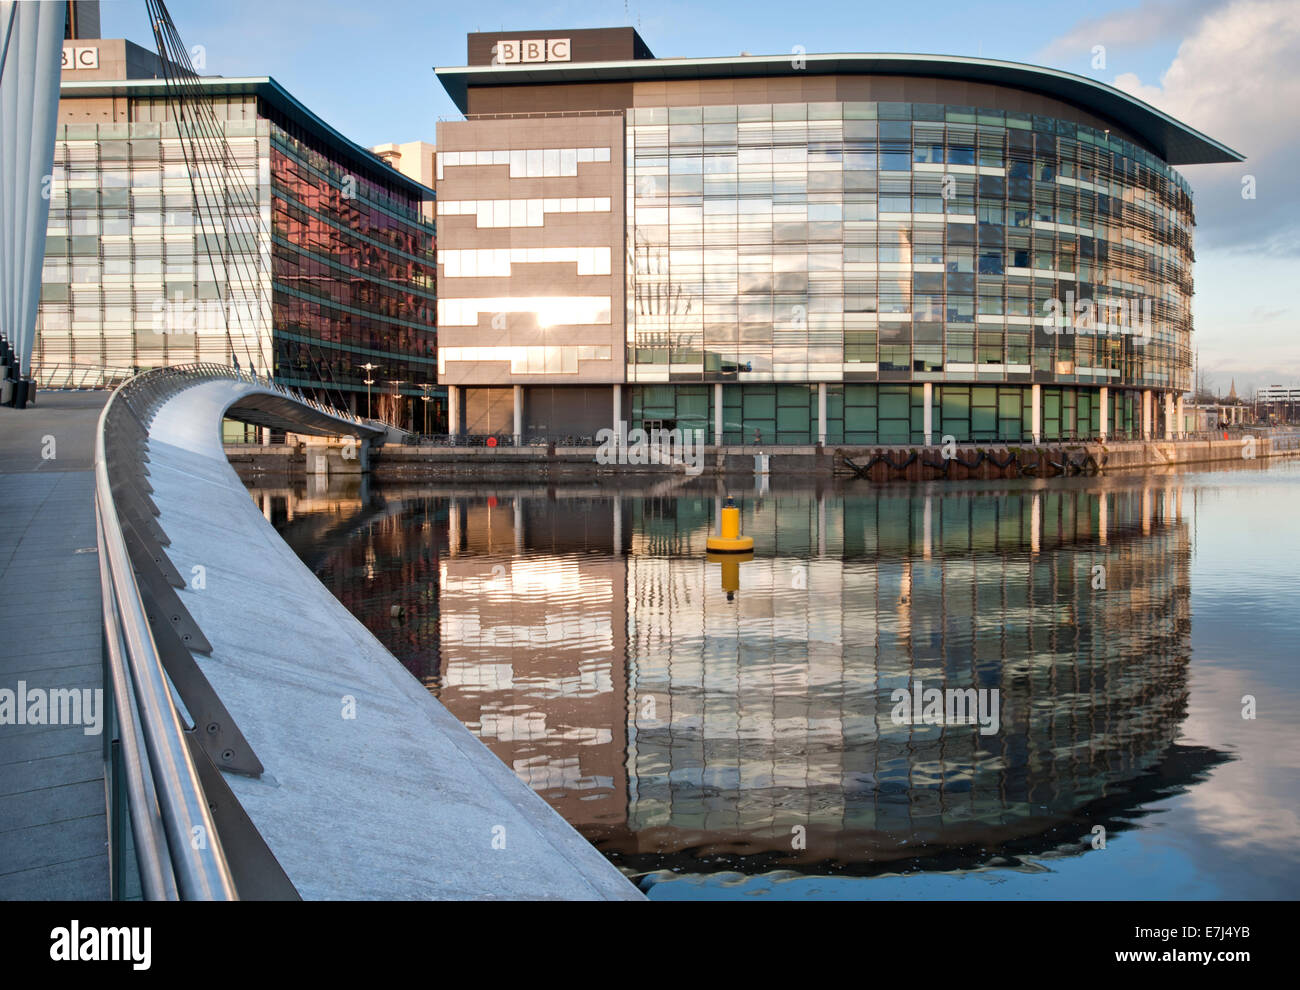 The BBC Studios and Footbridge at MediaCityUK, Salford Quays, Greater Manchester, England, UK Stock Photo